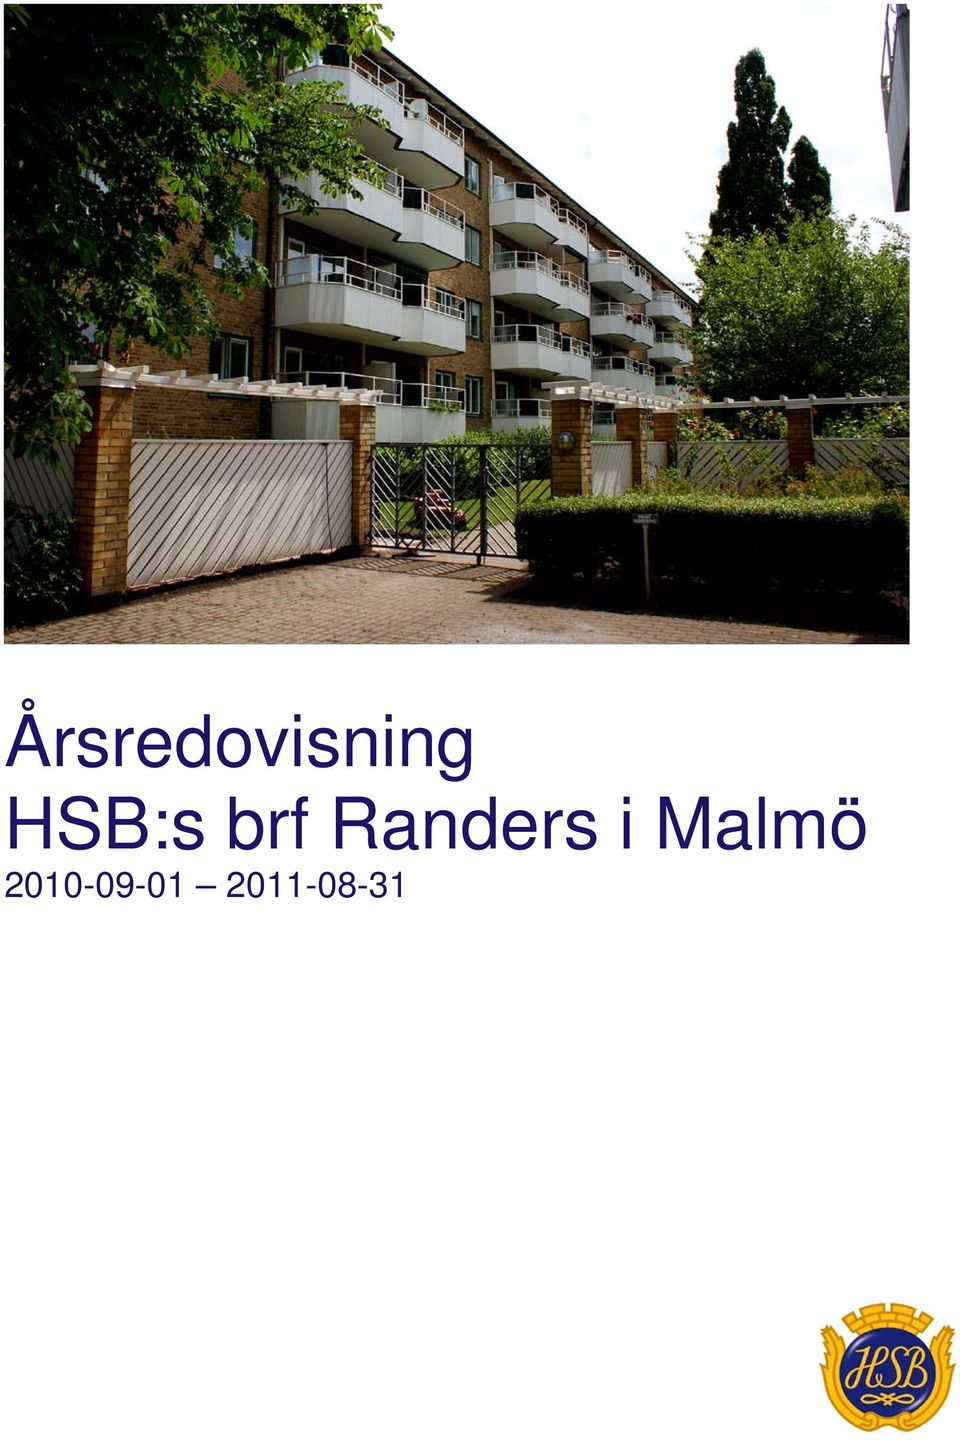 Randers i Malmö